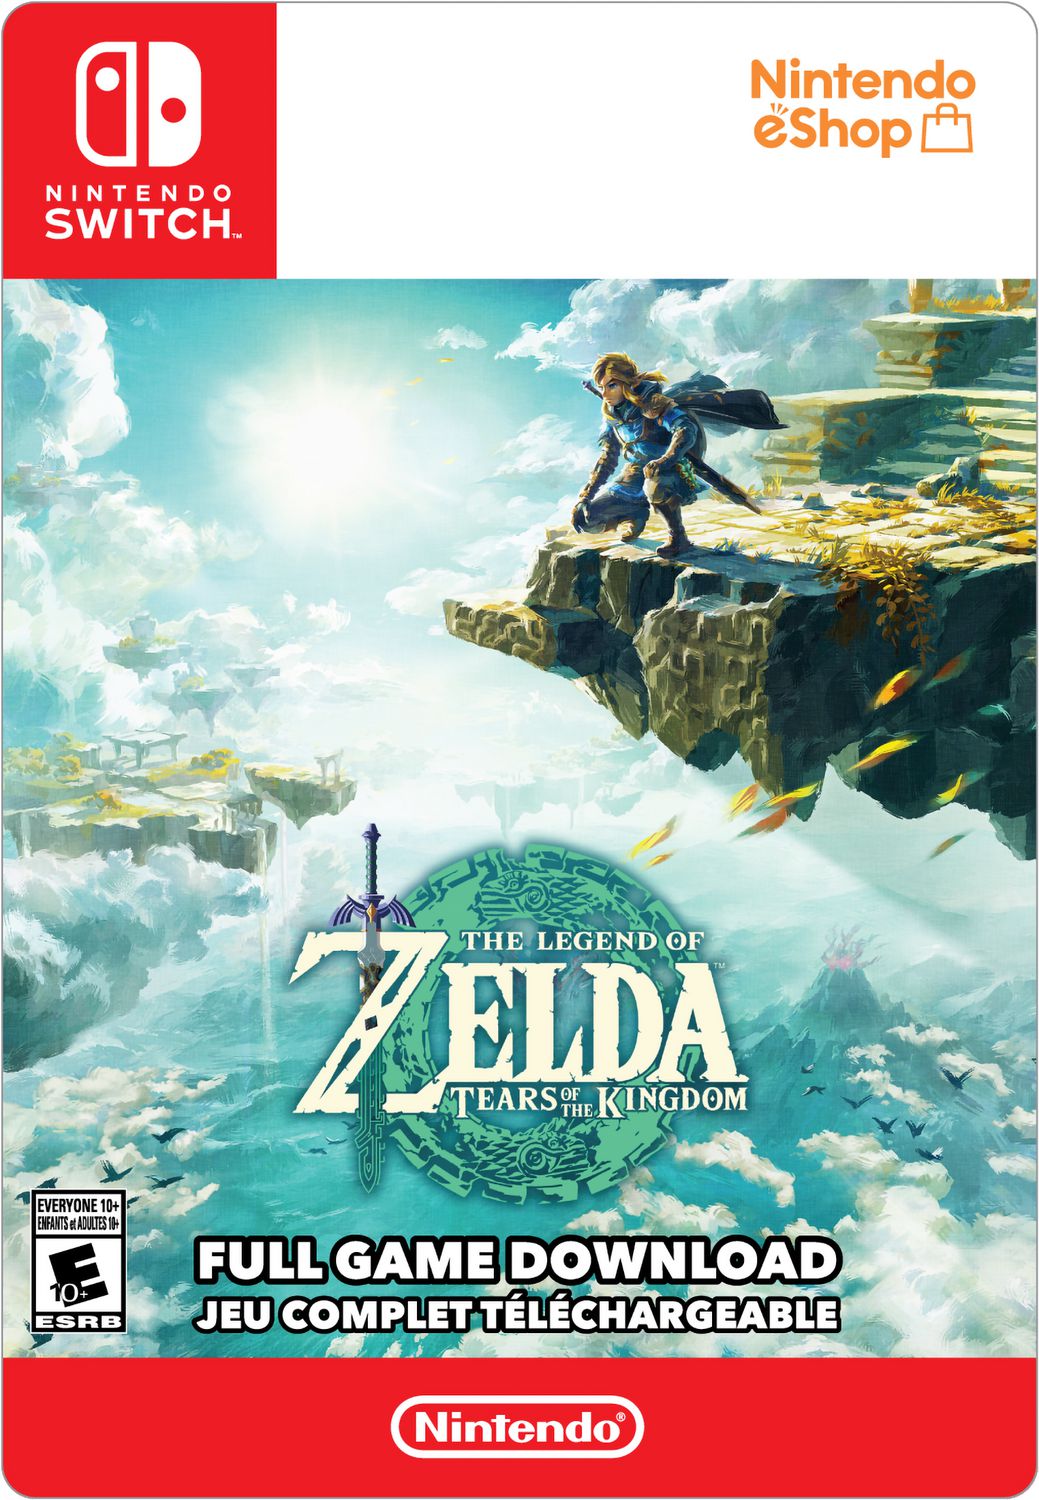 Kingdom Zelda: of Code] of Nintendo Legend Switch [Digital Tears The - the